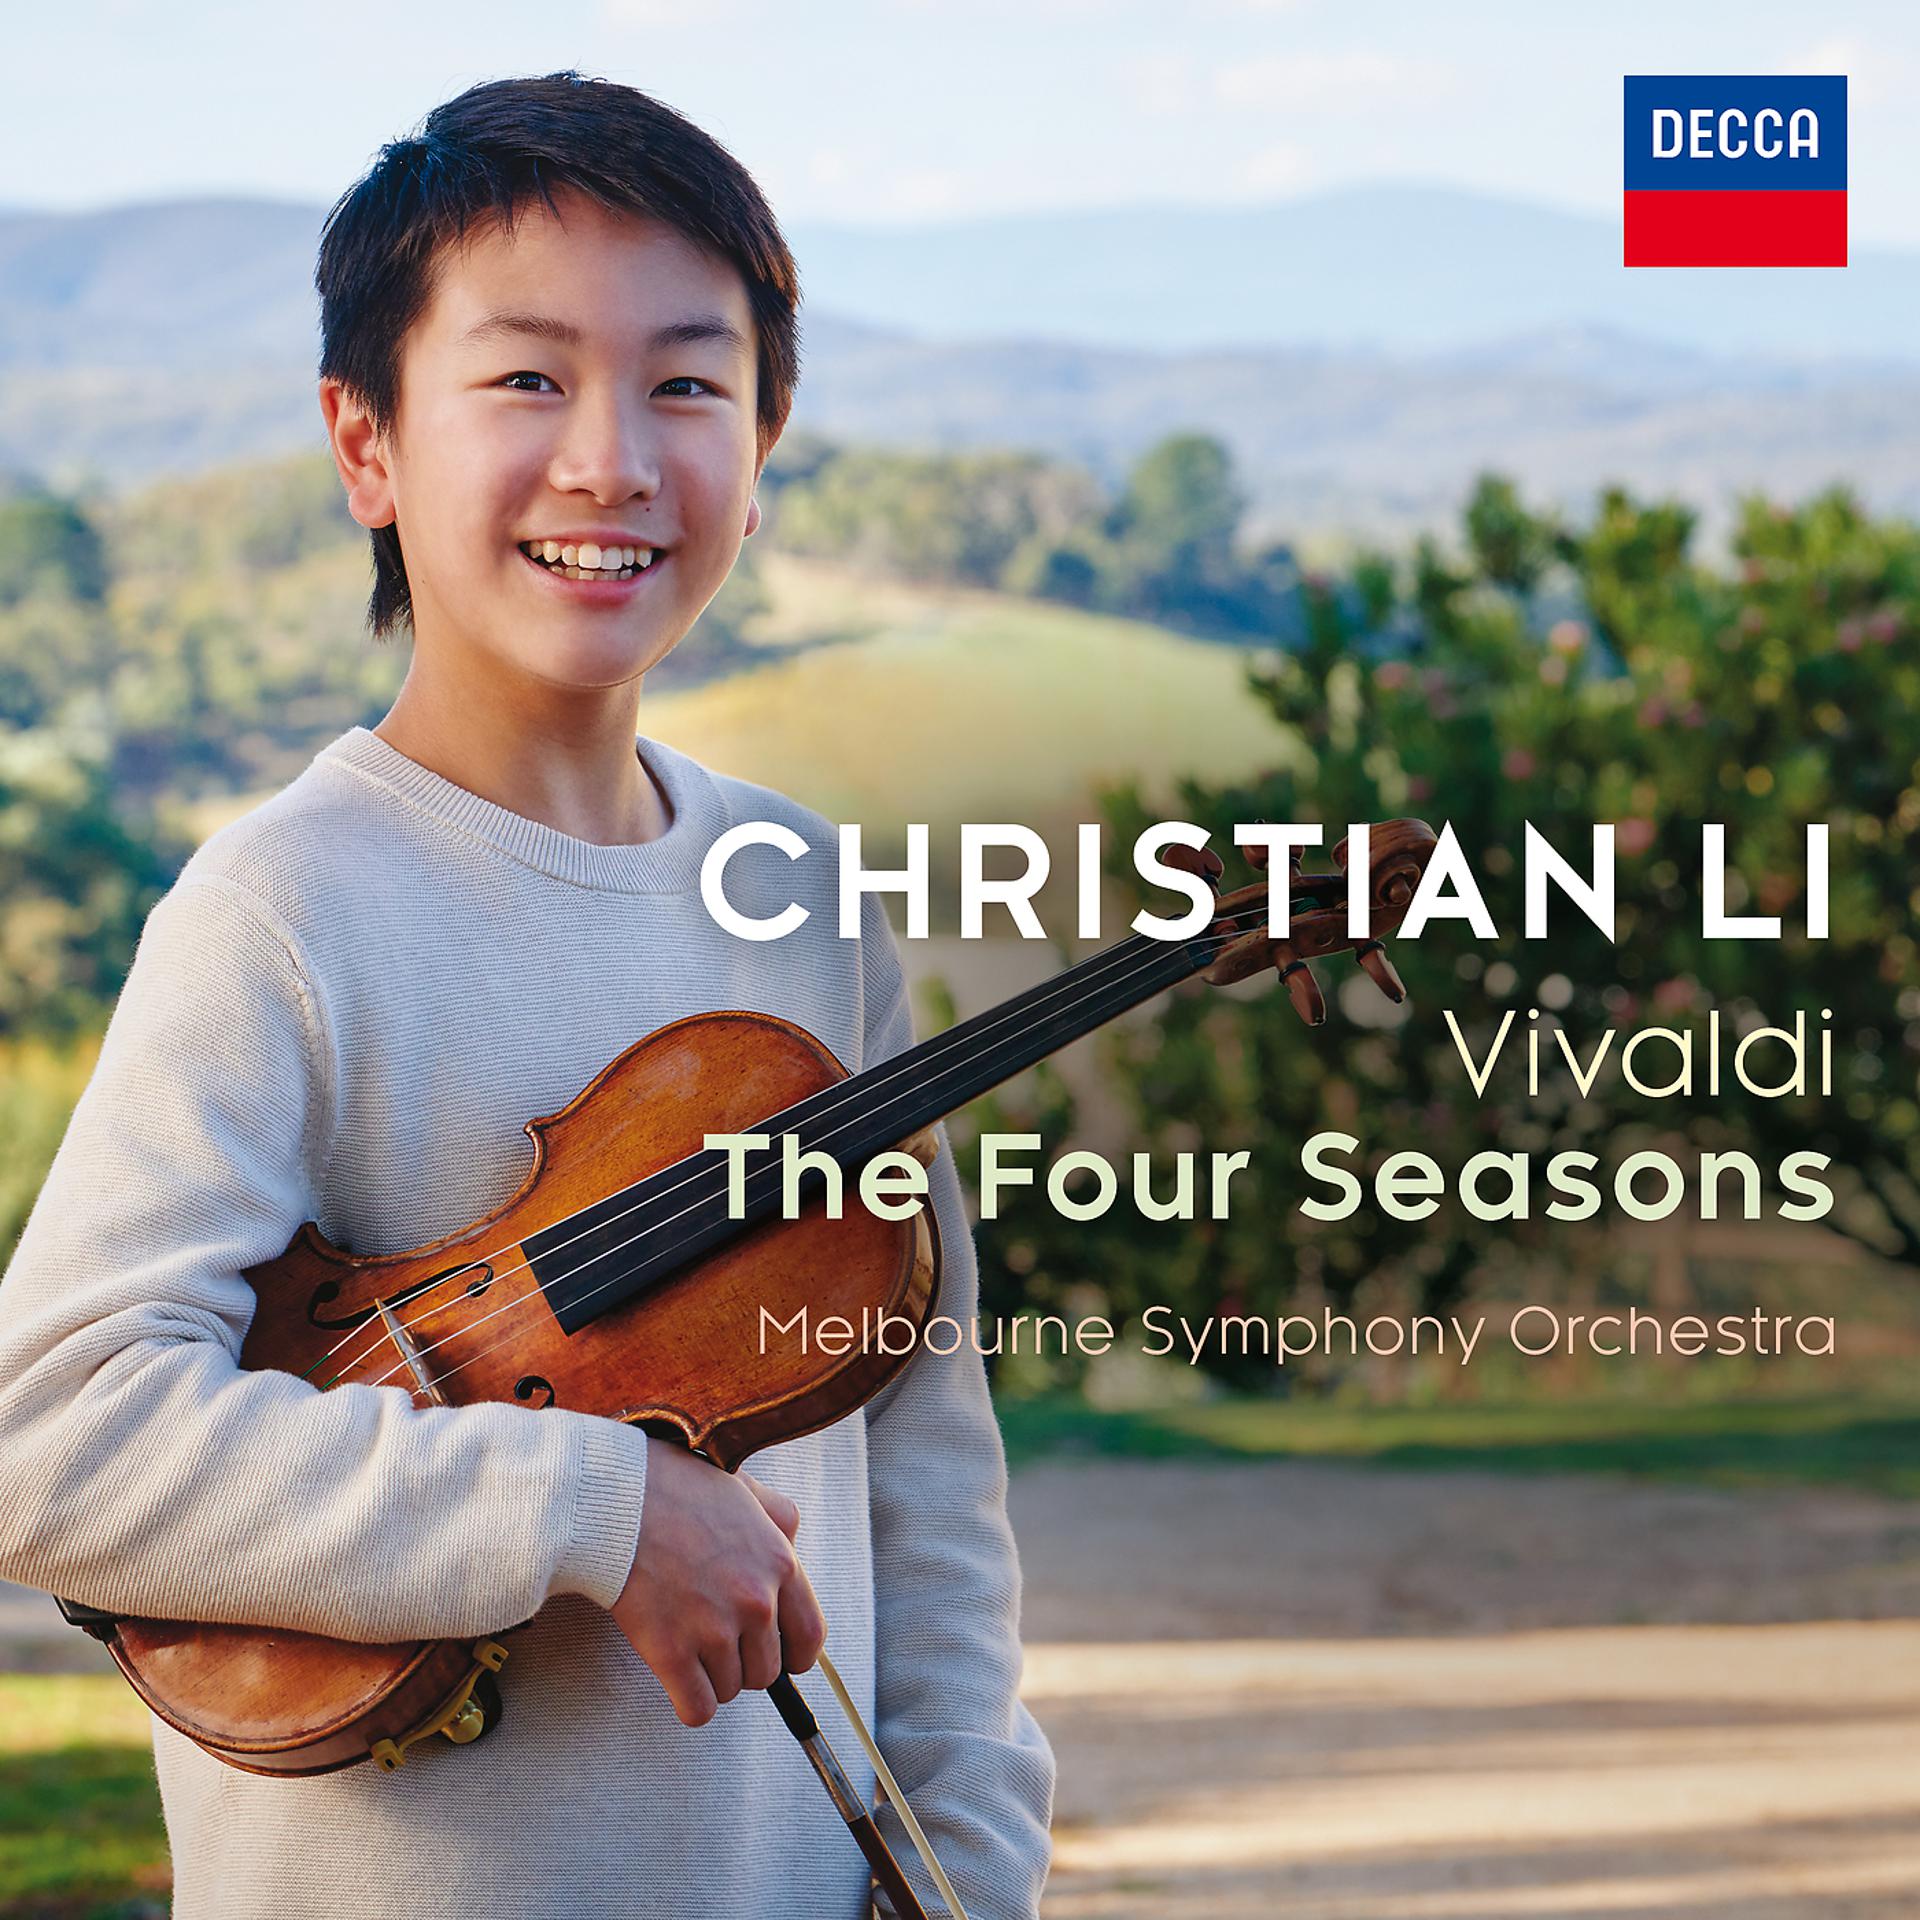 Постер к треку Christian Li, Melbourne Symphony Orchestra - Vivaldi: The Four Seasons, Violin Concerto No. 3 in F Major, RV 293 "Autumn" - III. Allegro